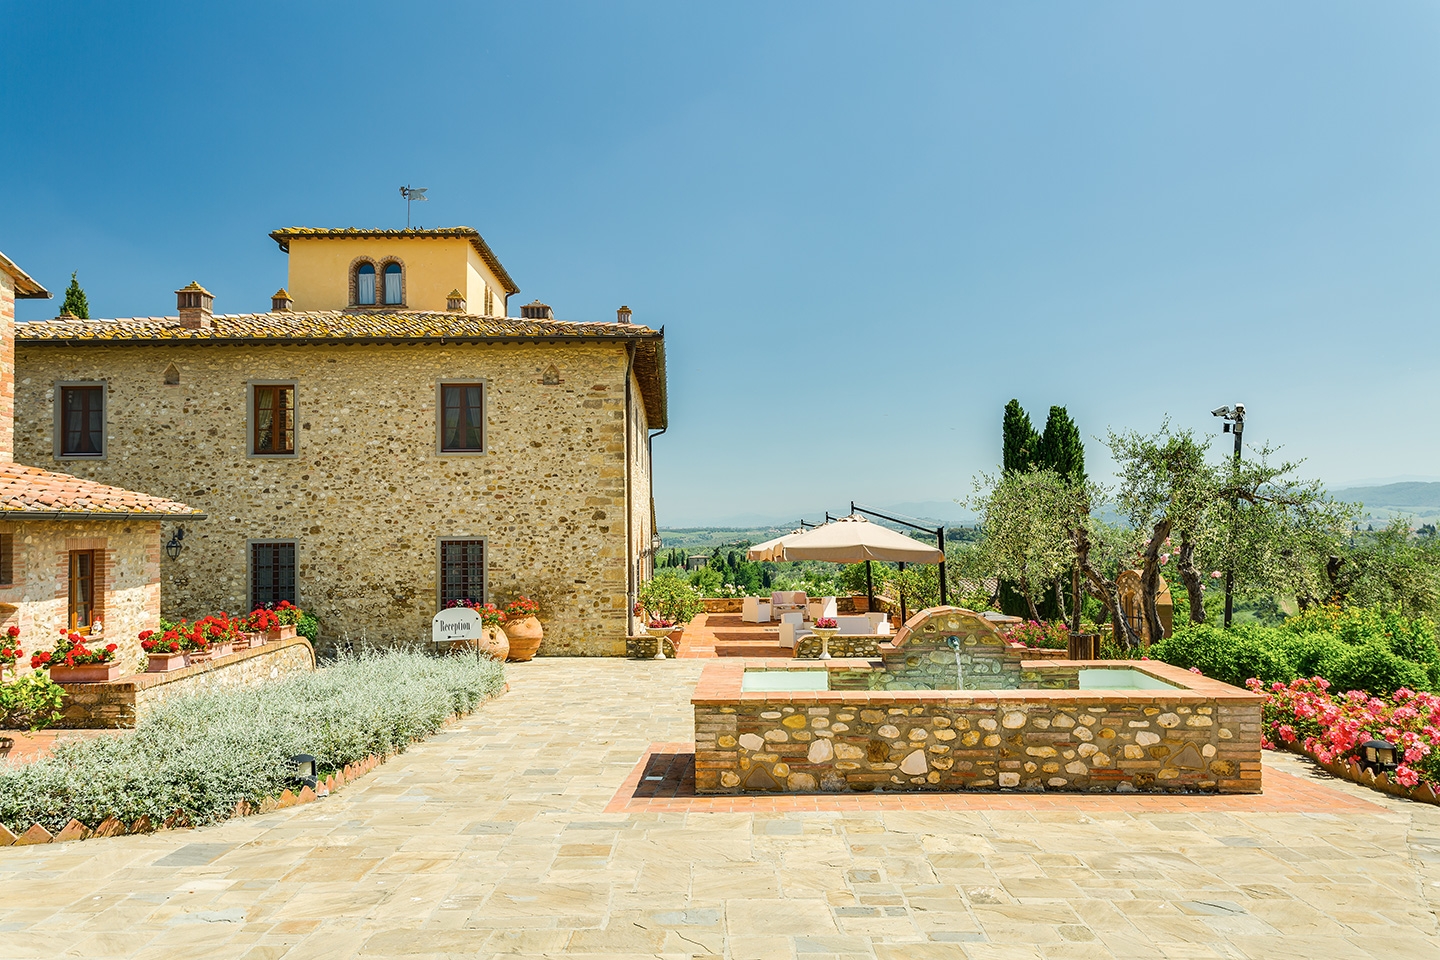 The facade and terrace of Villa Il Sole, Tuscany